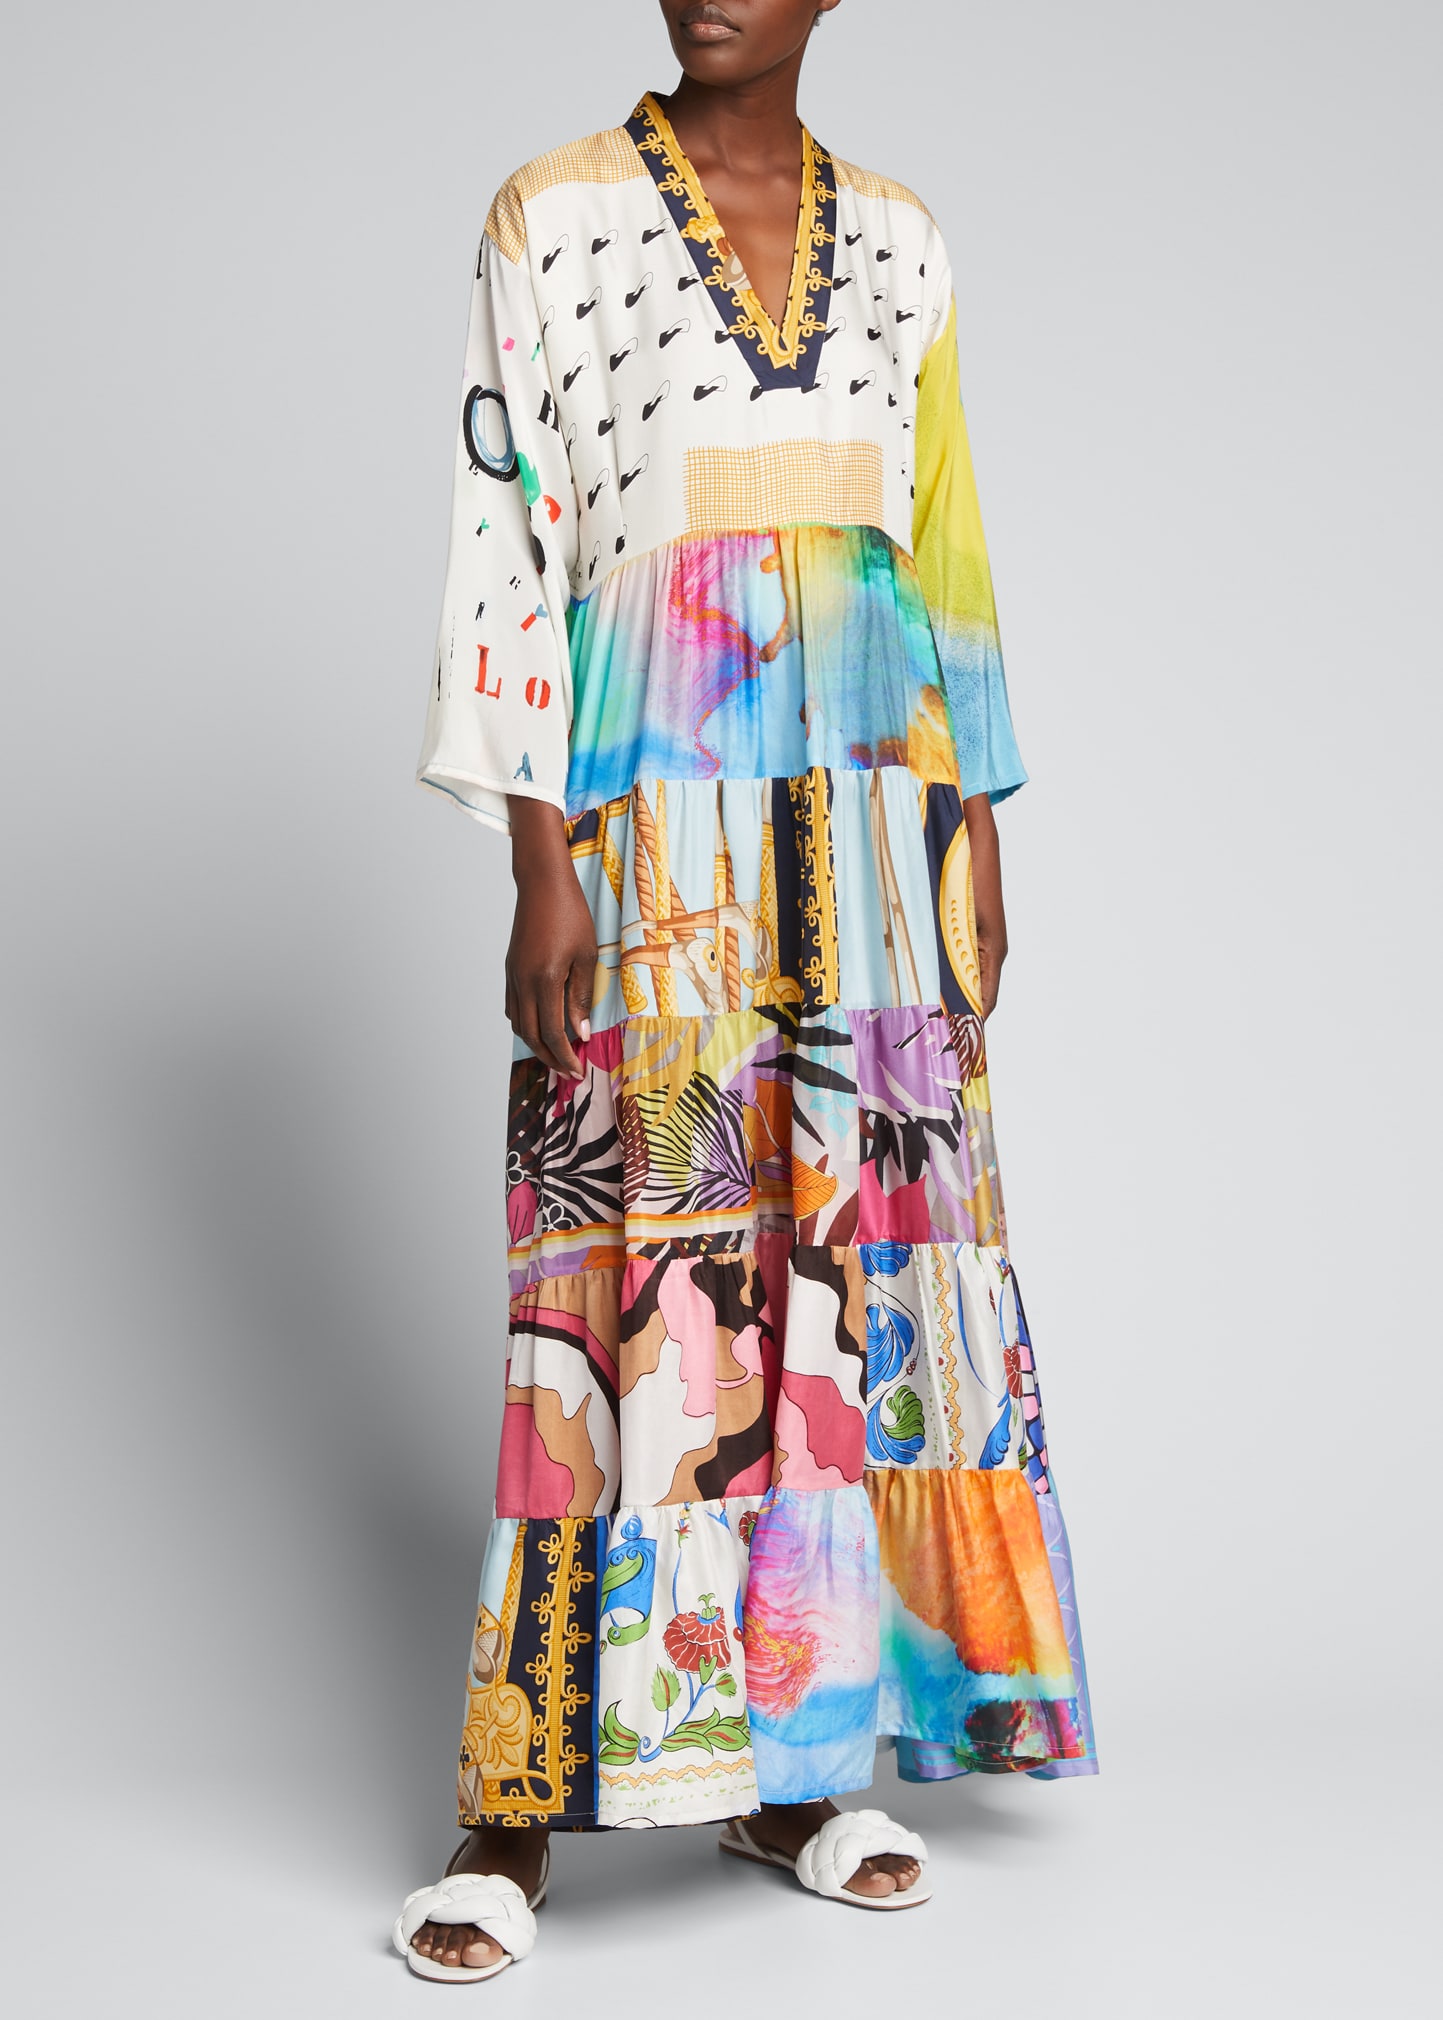 Rianna + Nina One-of-a-kind Mixed-print Silk Maxi Dress